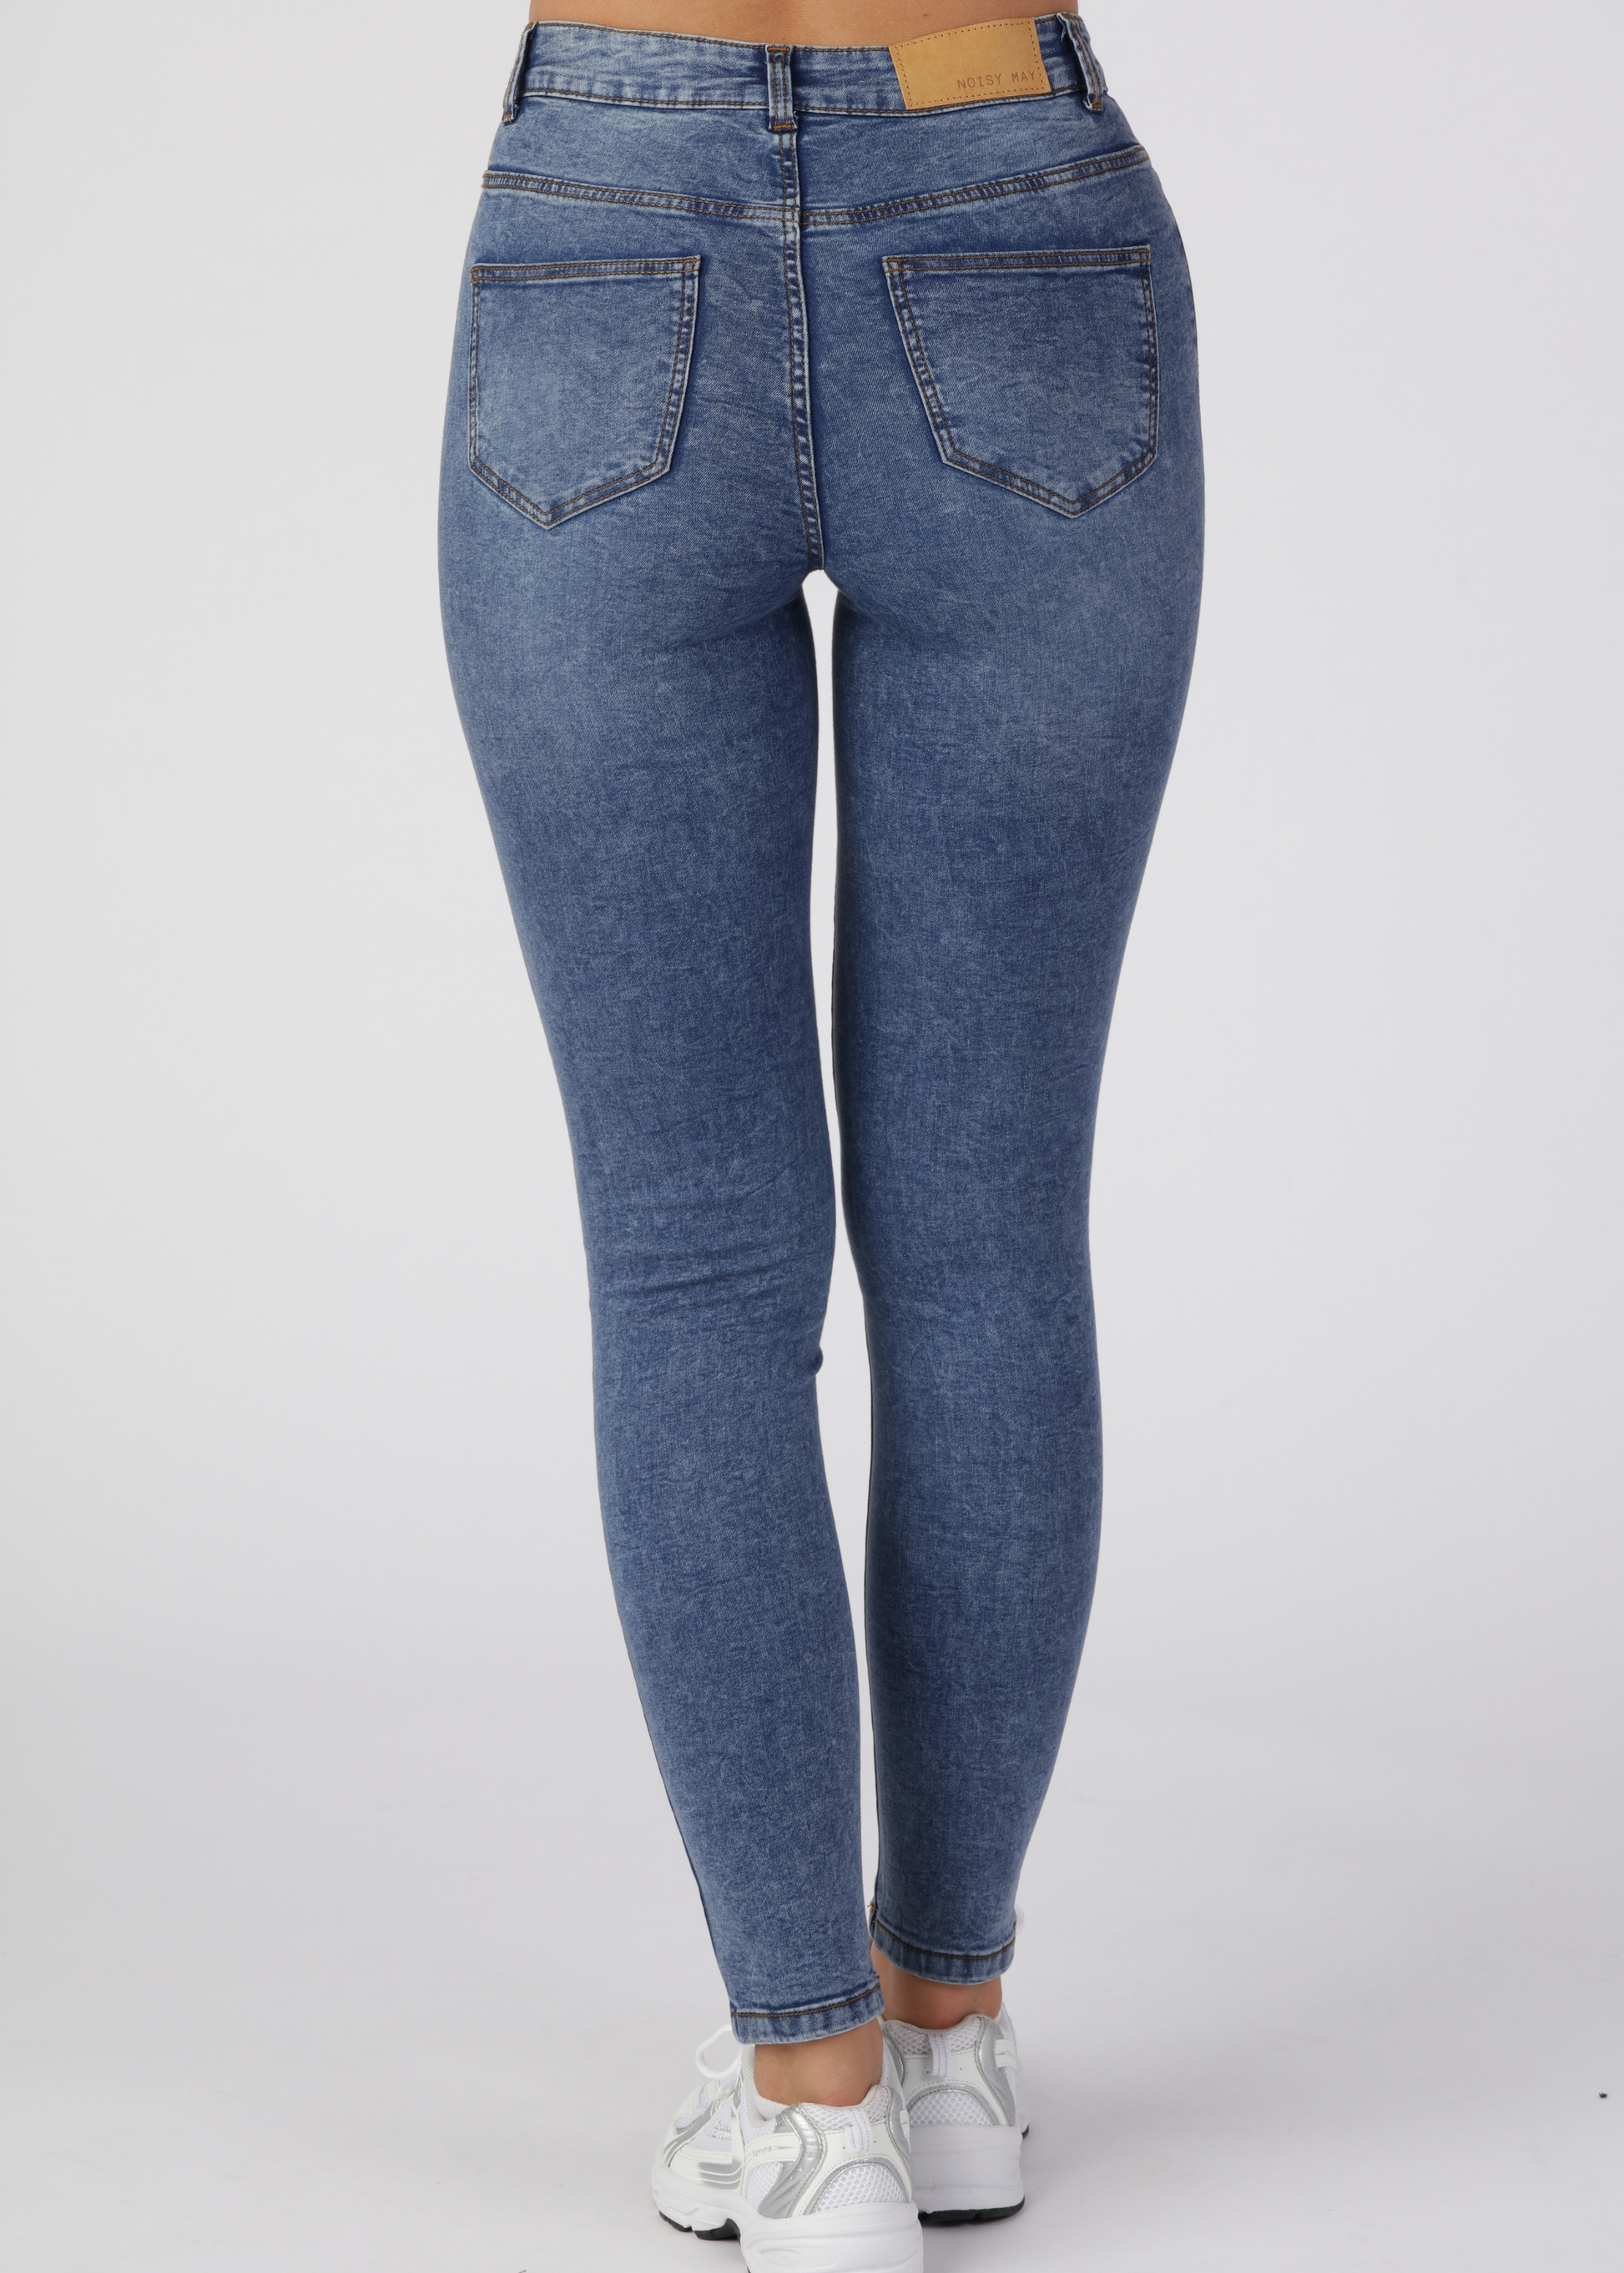 Callie Skinny Jeans - Washed Medium Blue - for kvinde - NOISY MAY - Jeans